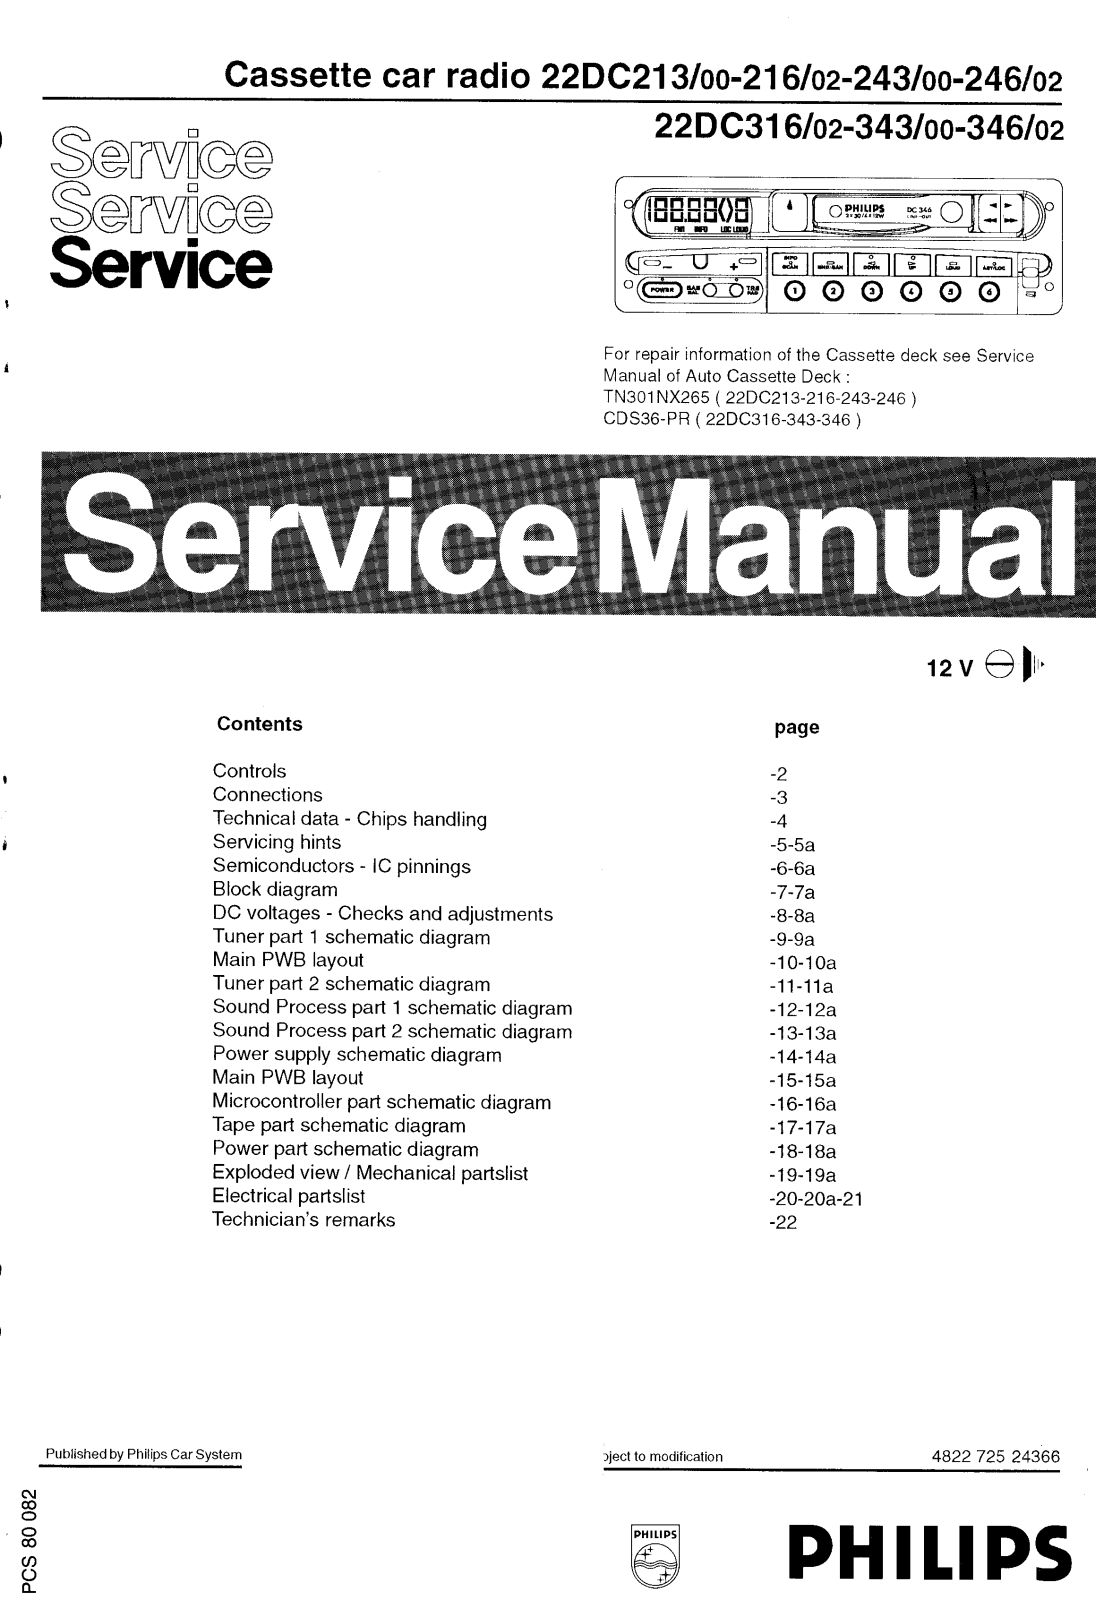 Philips 22-DC-243, 22-DC-216, 22-DC-213 Service Manual